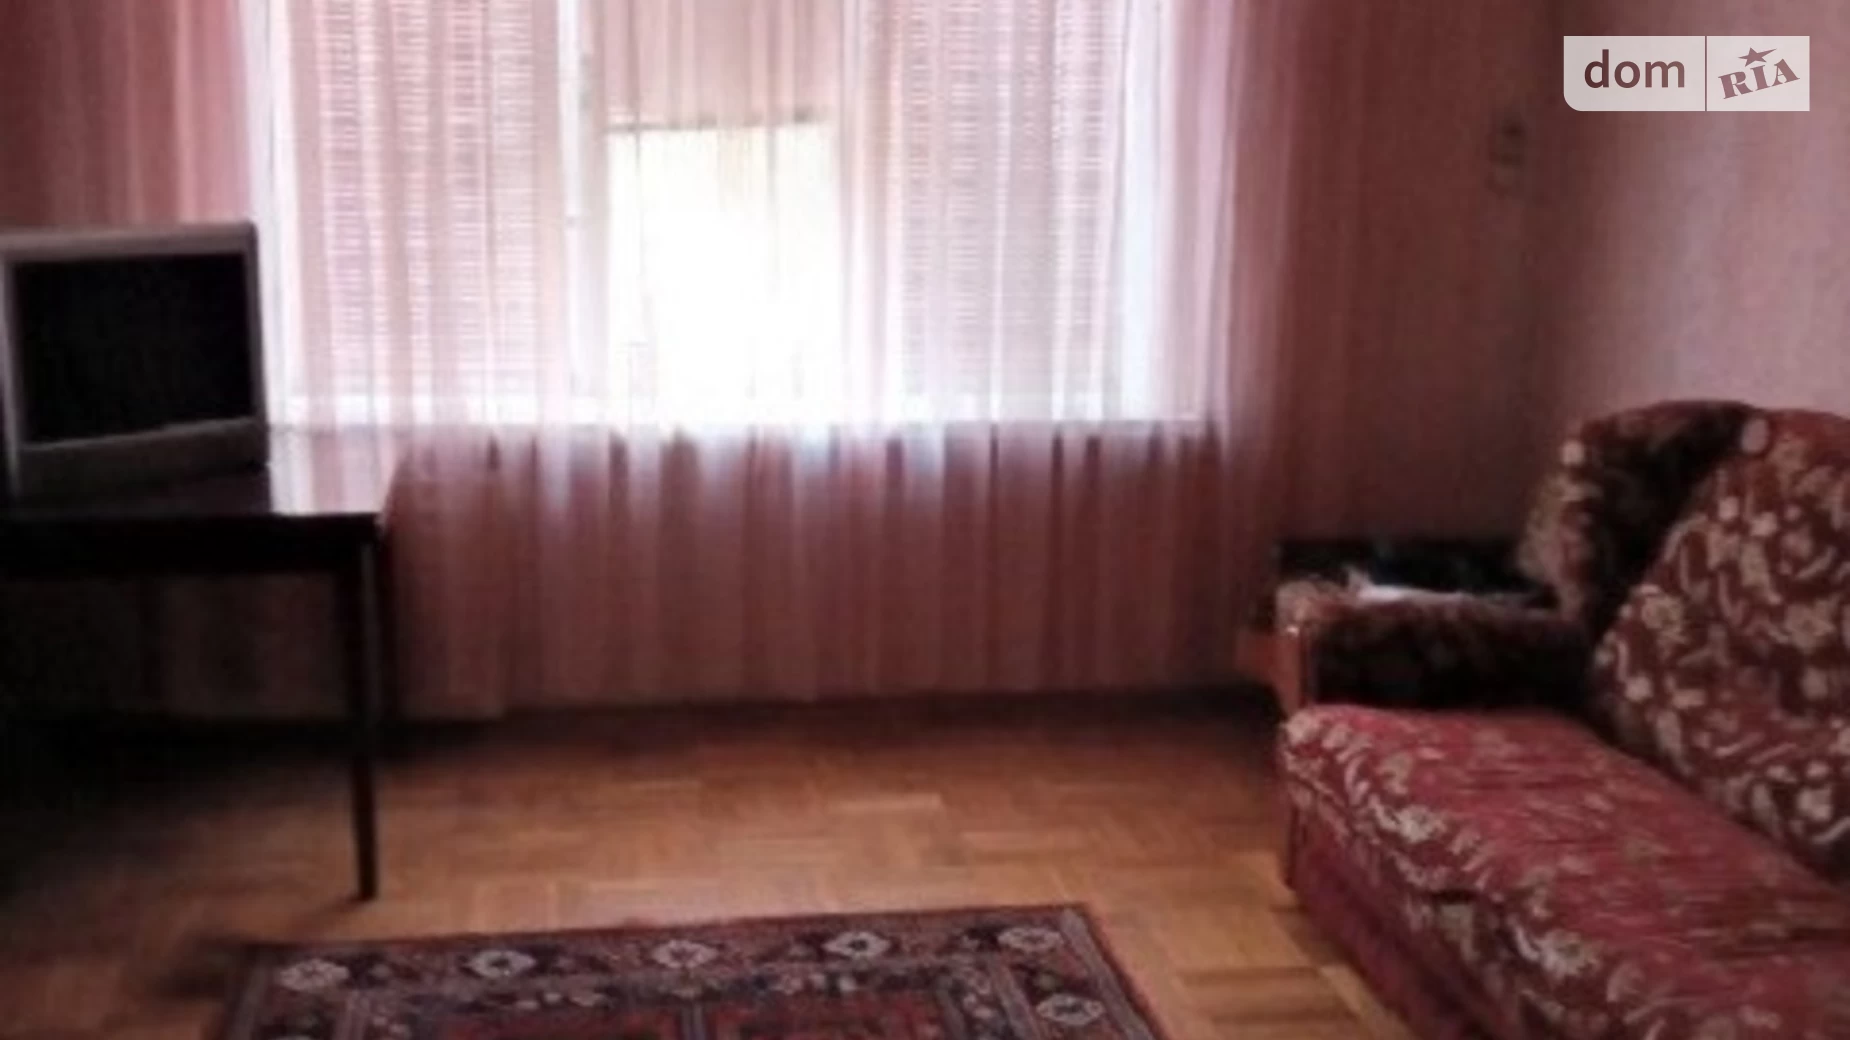 2-комнатная квартира 49.05 кв. м в Запорожье, ул. Ладожская, 8 - фото 3